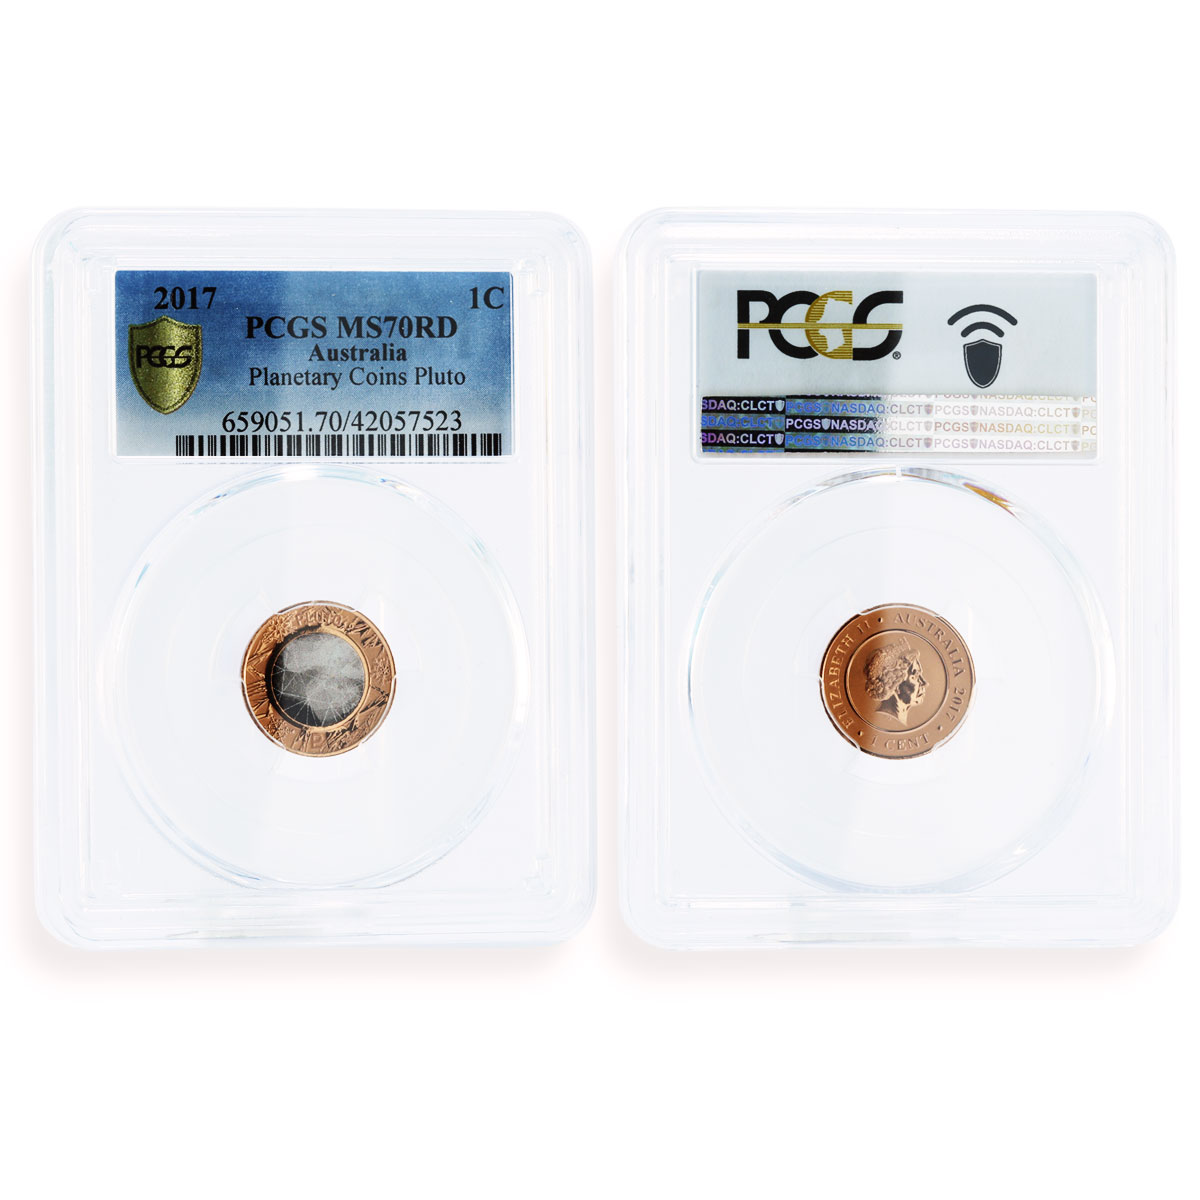 Australia set of 10 coins Planetary Coins Mars Sun Earth MS 68 - 70 PCGS 2017